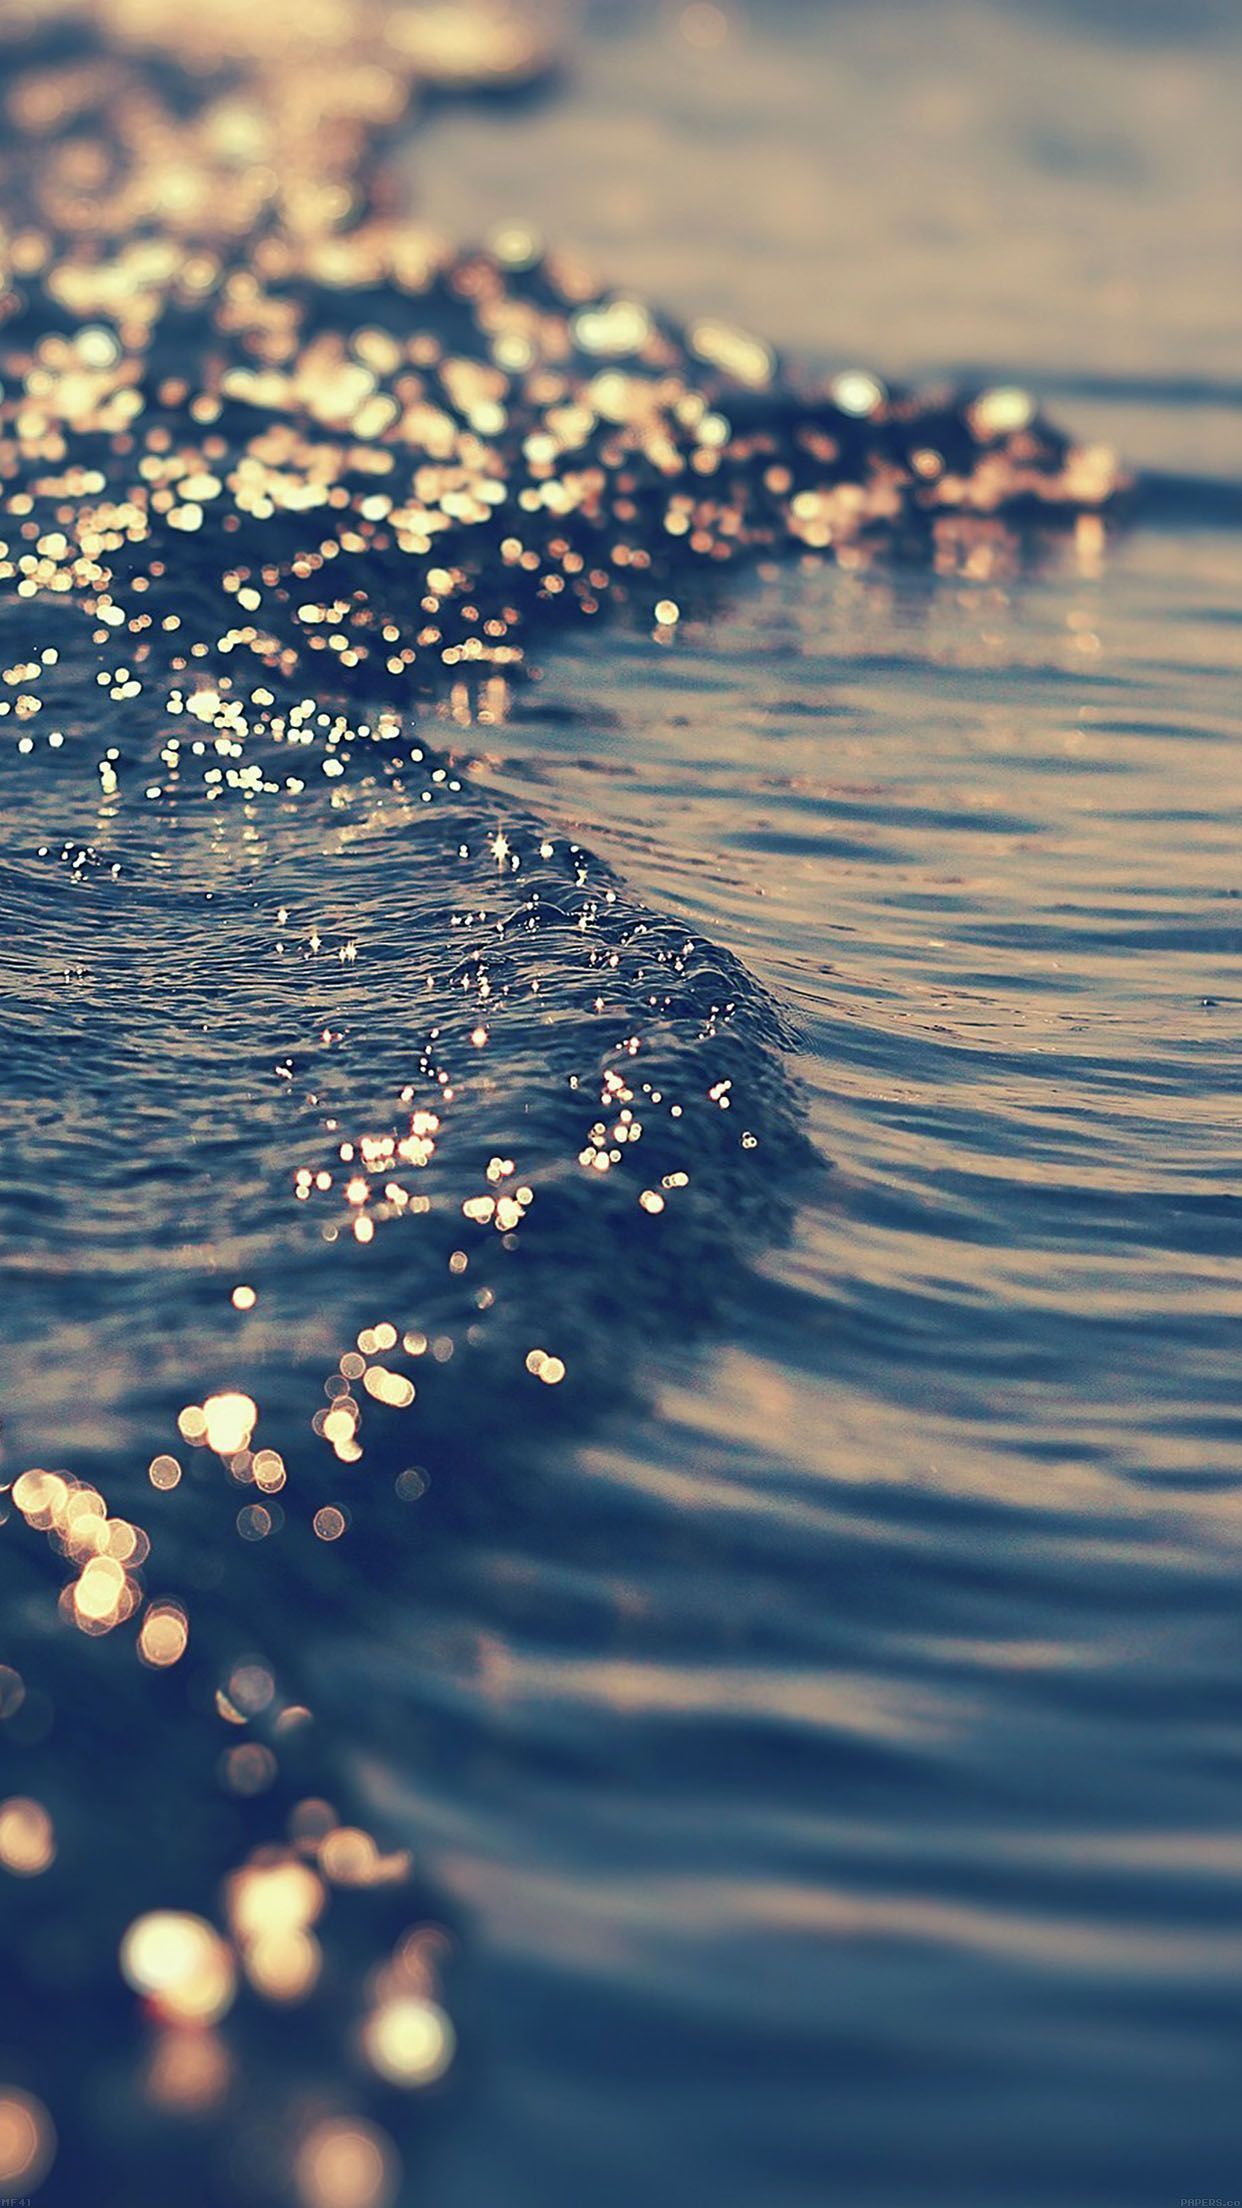 gold-sea-wave-water-sunset-ocean-nature-34-iphone6-plus-wallpaper.jpg